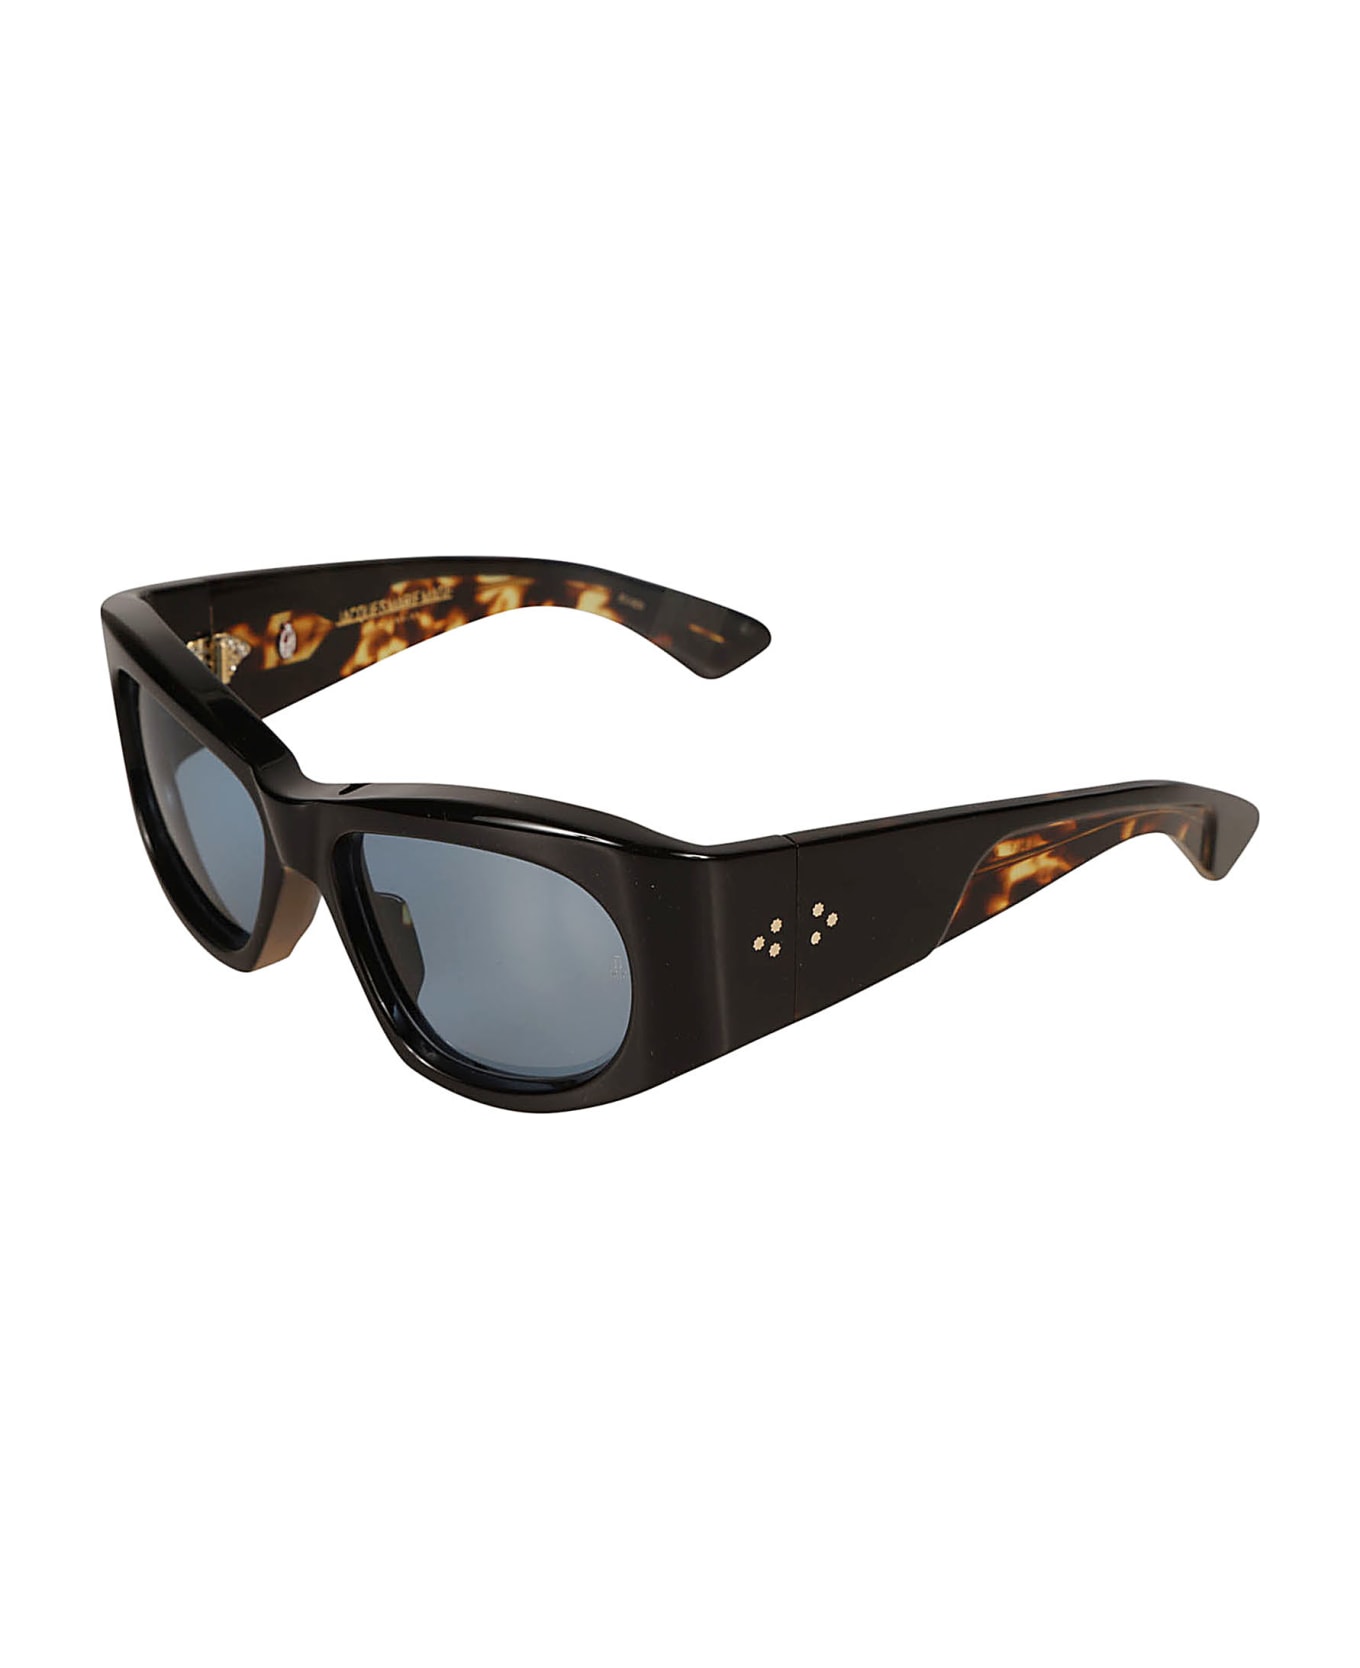 Jacques Marie Mage Nadja Sunglasses Sunglasses - Azure/Dark Gold